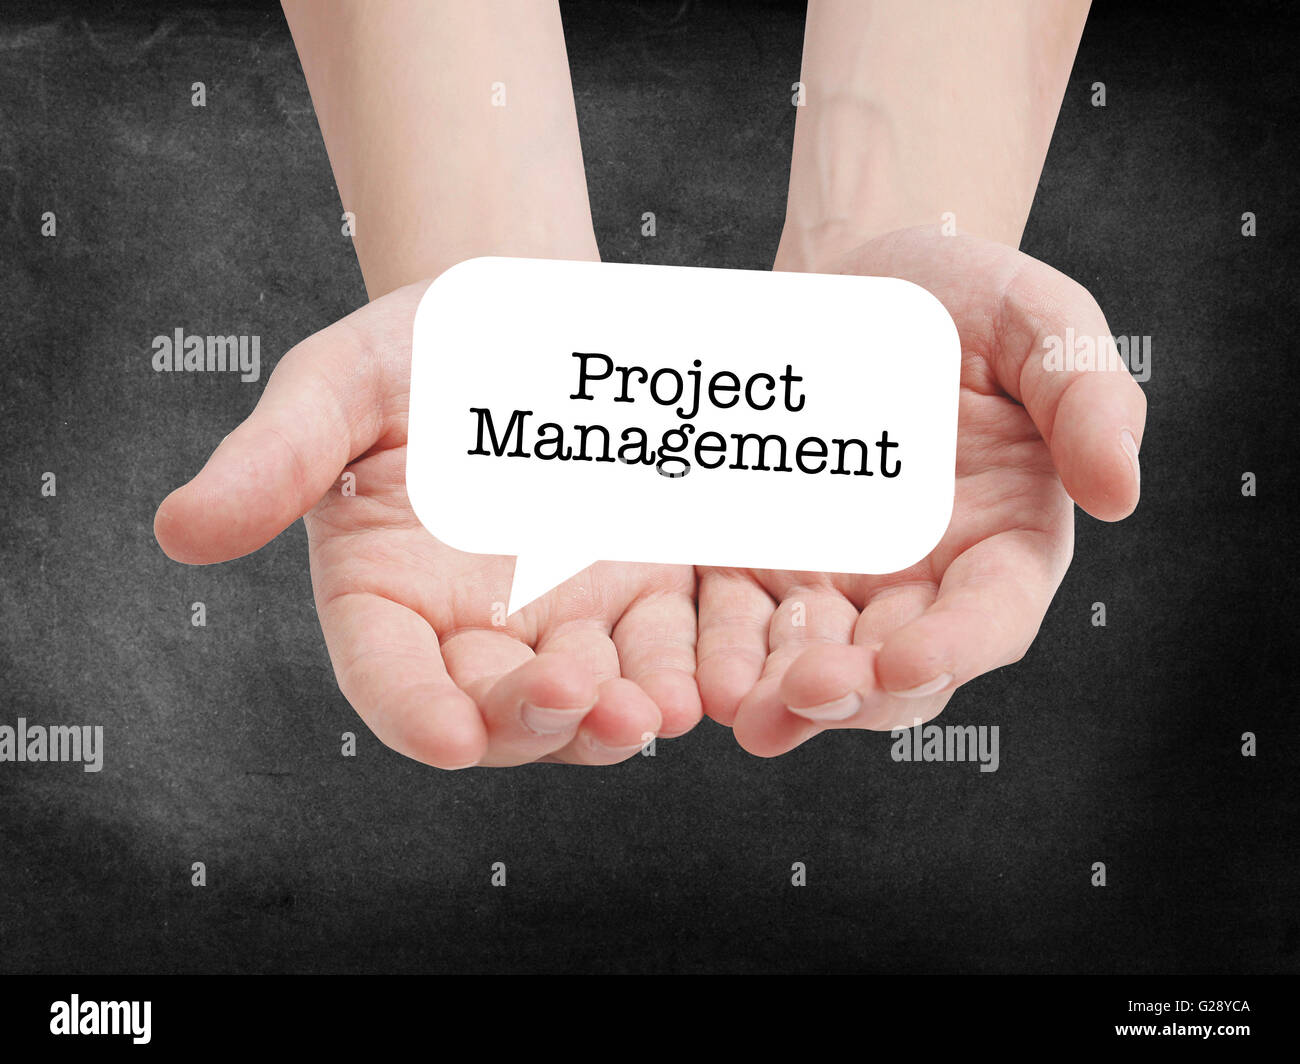 Project Management written on a speechbubble Stock Photo